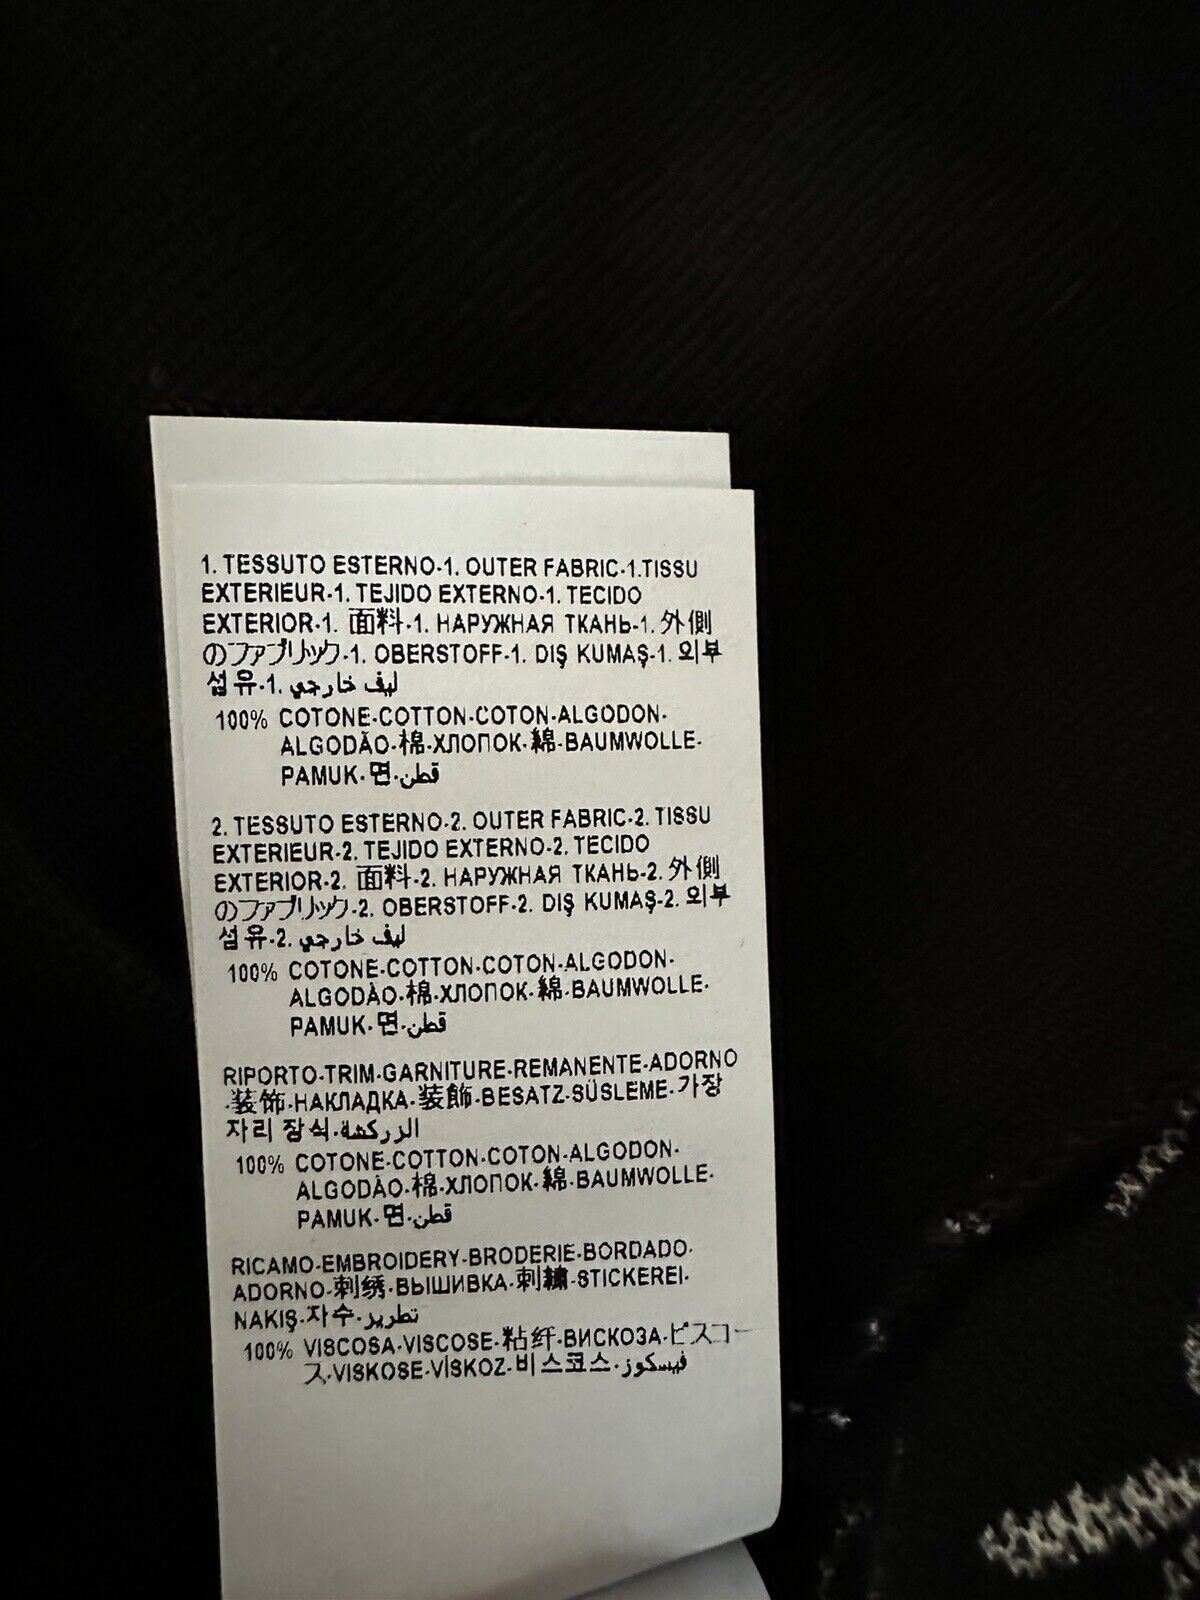 NWT $650 Versace Piquet Fabric Black/White Polo Cotton Jersey Shirt 5XL 1002755